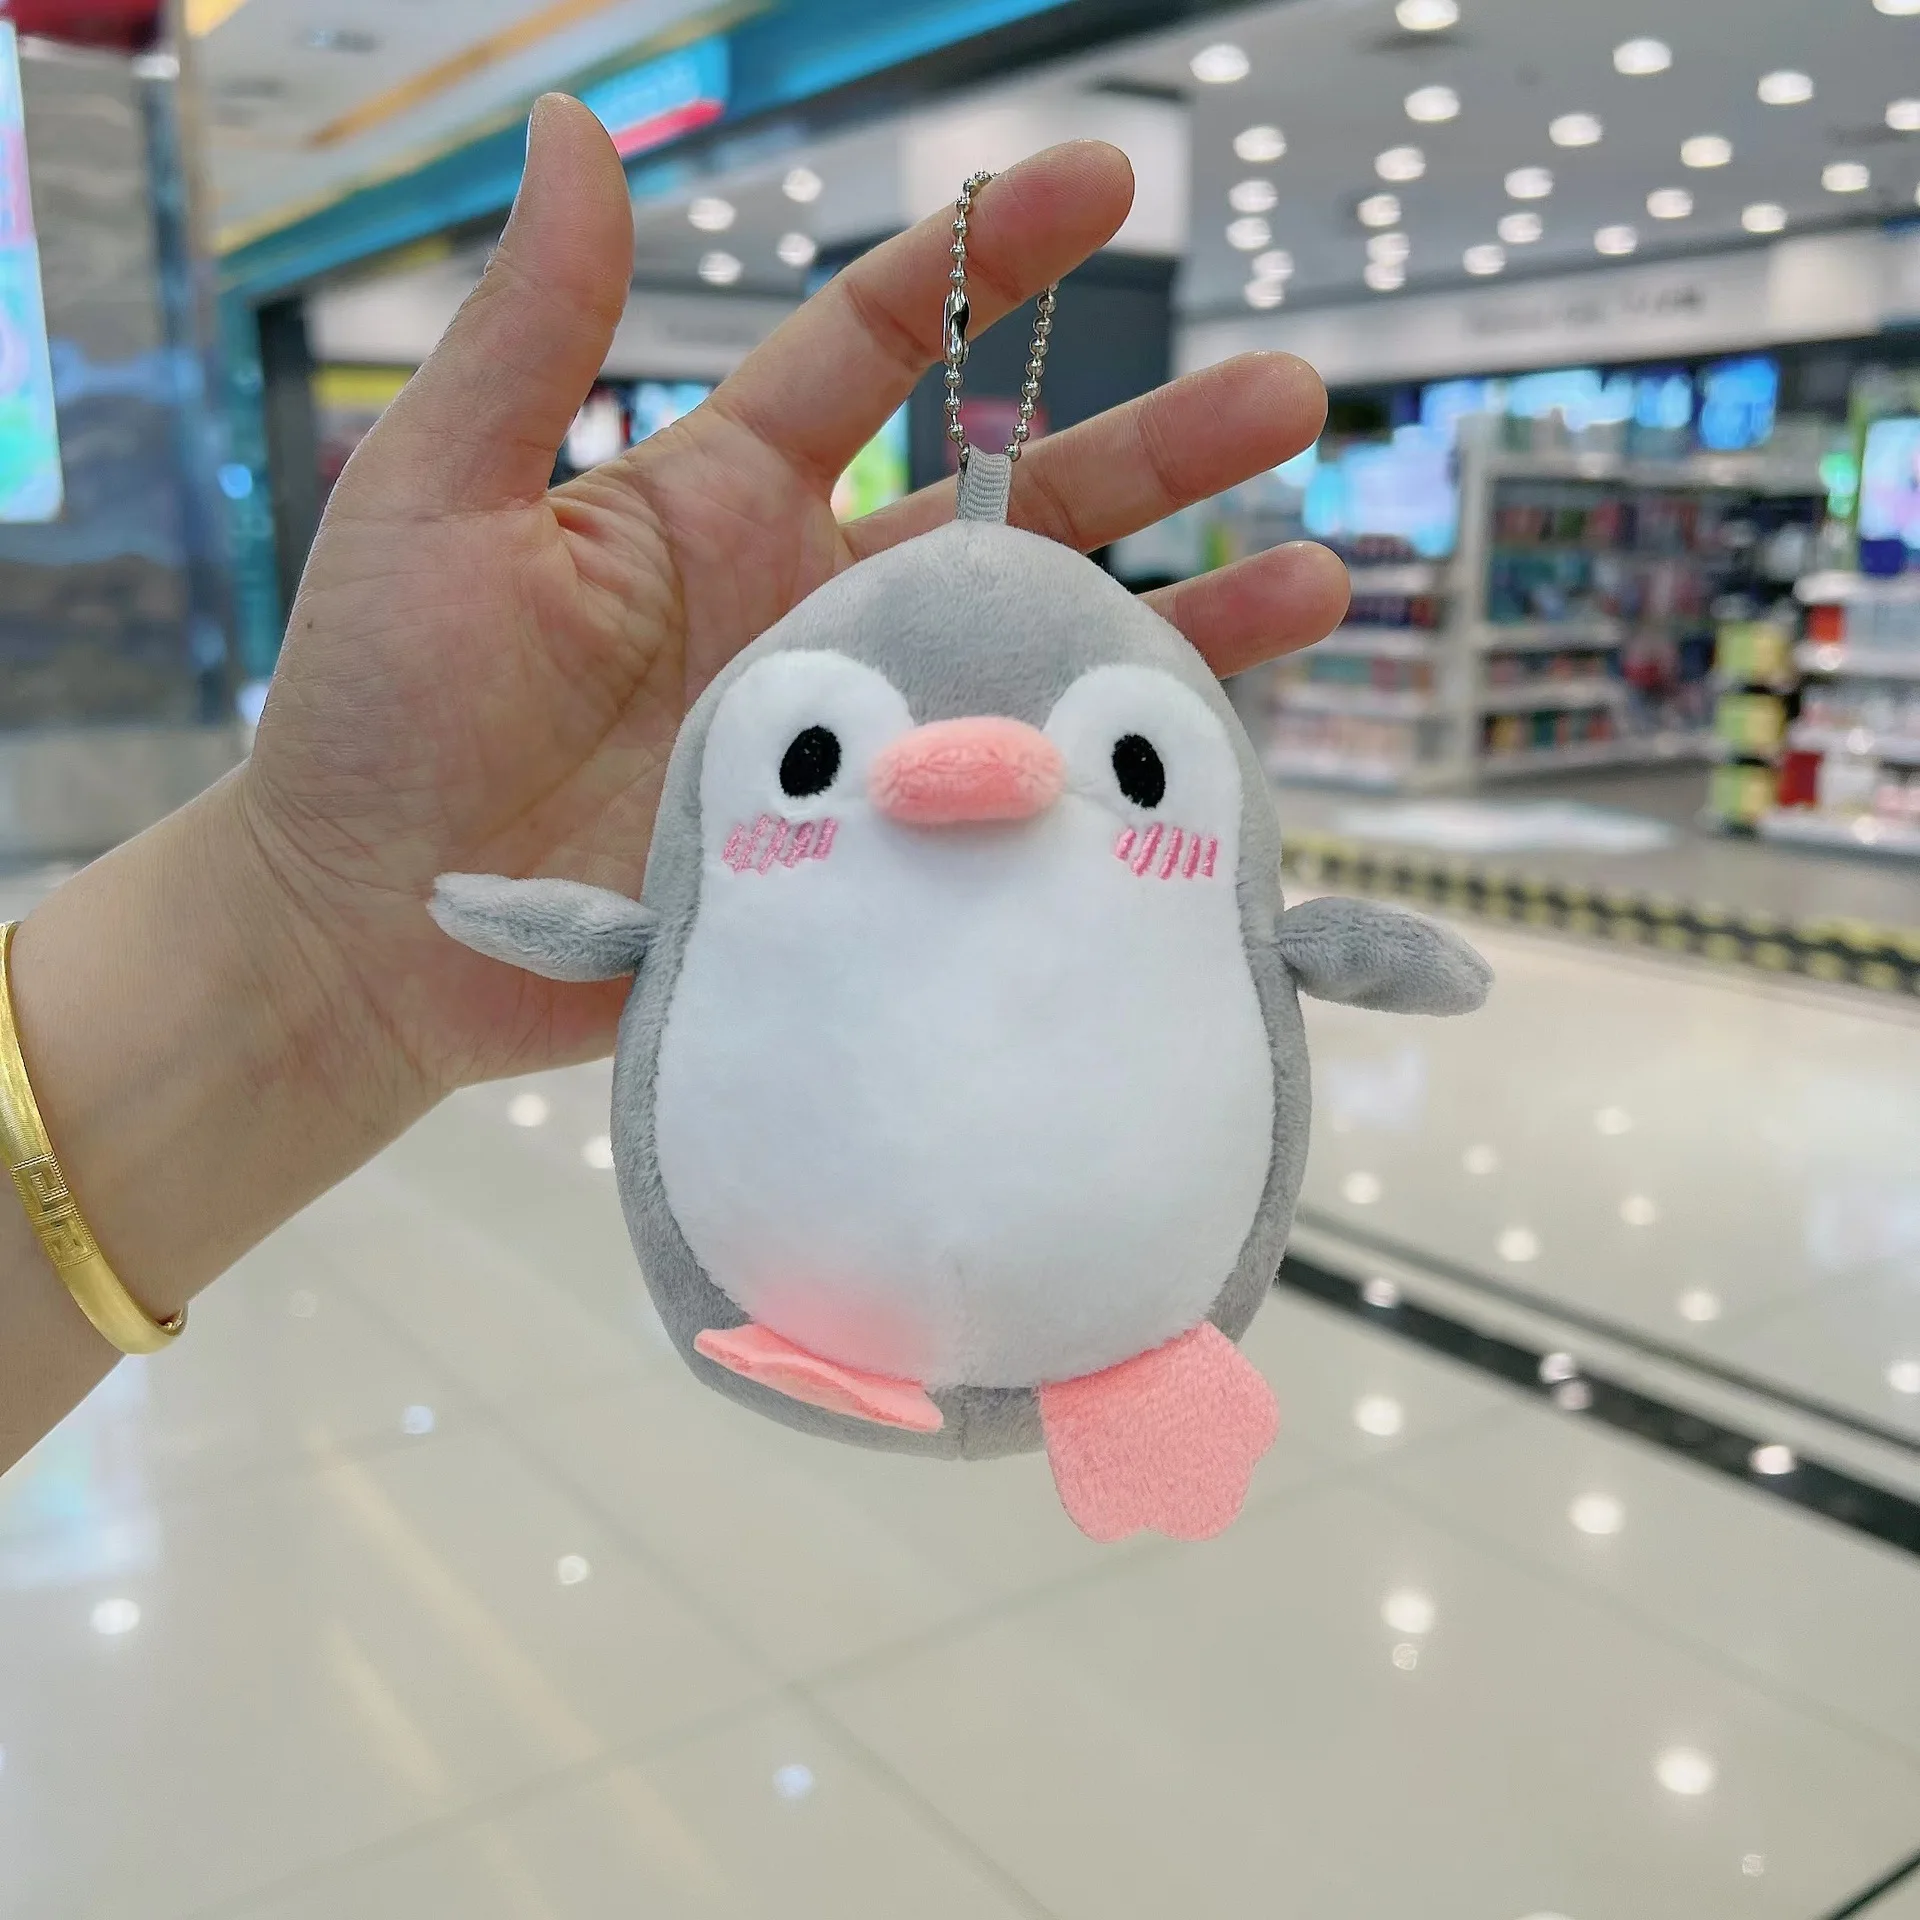 Penguin doll pendant cute little penguin plush toy keychain pendant bag hanging decoration grab Machine gift